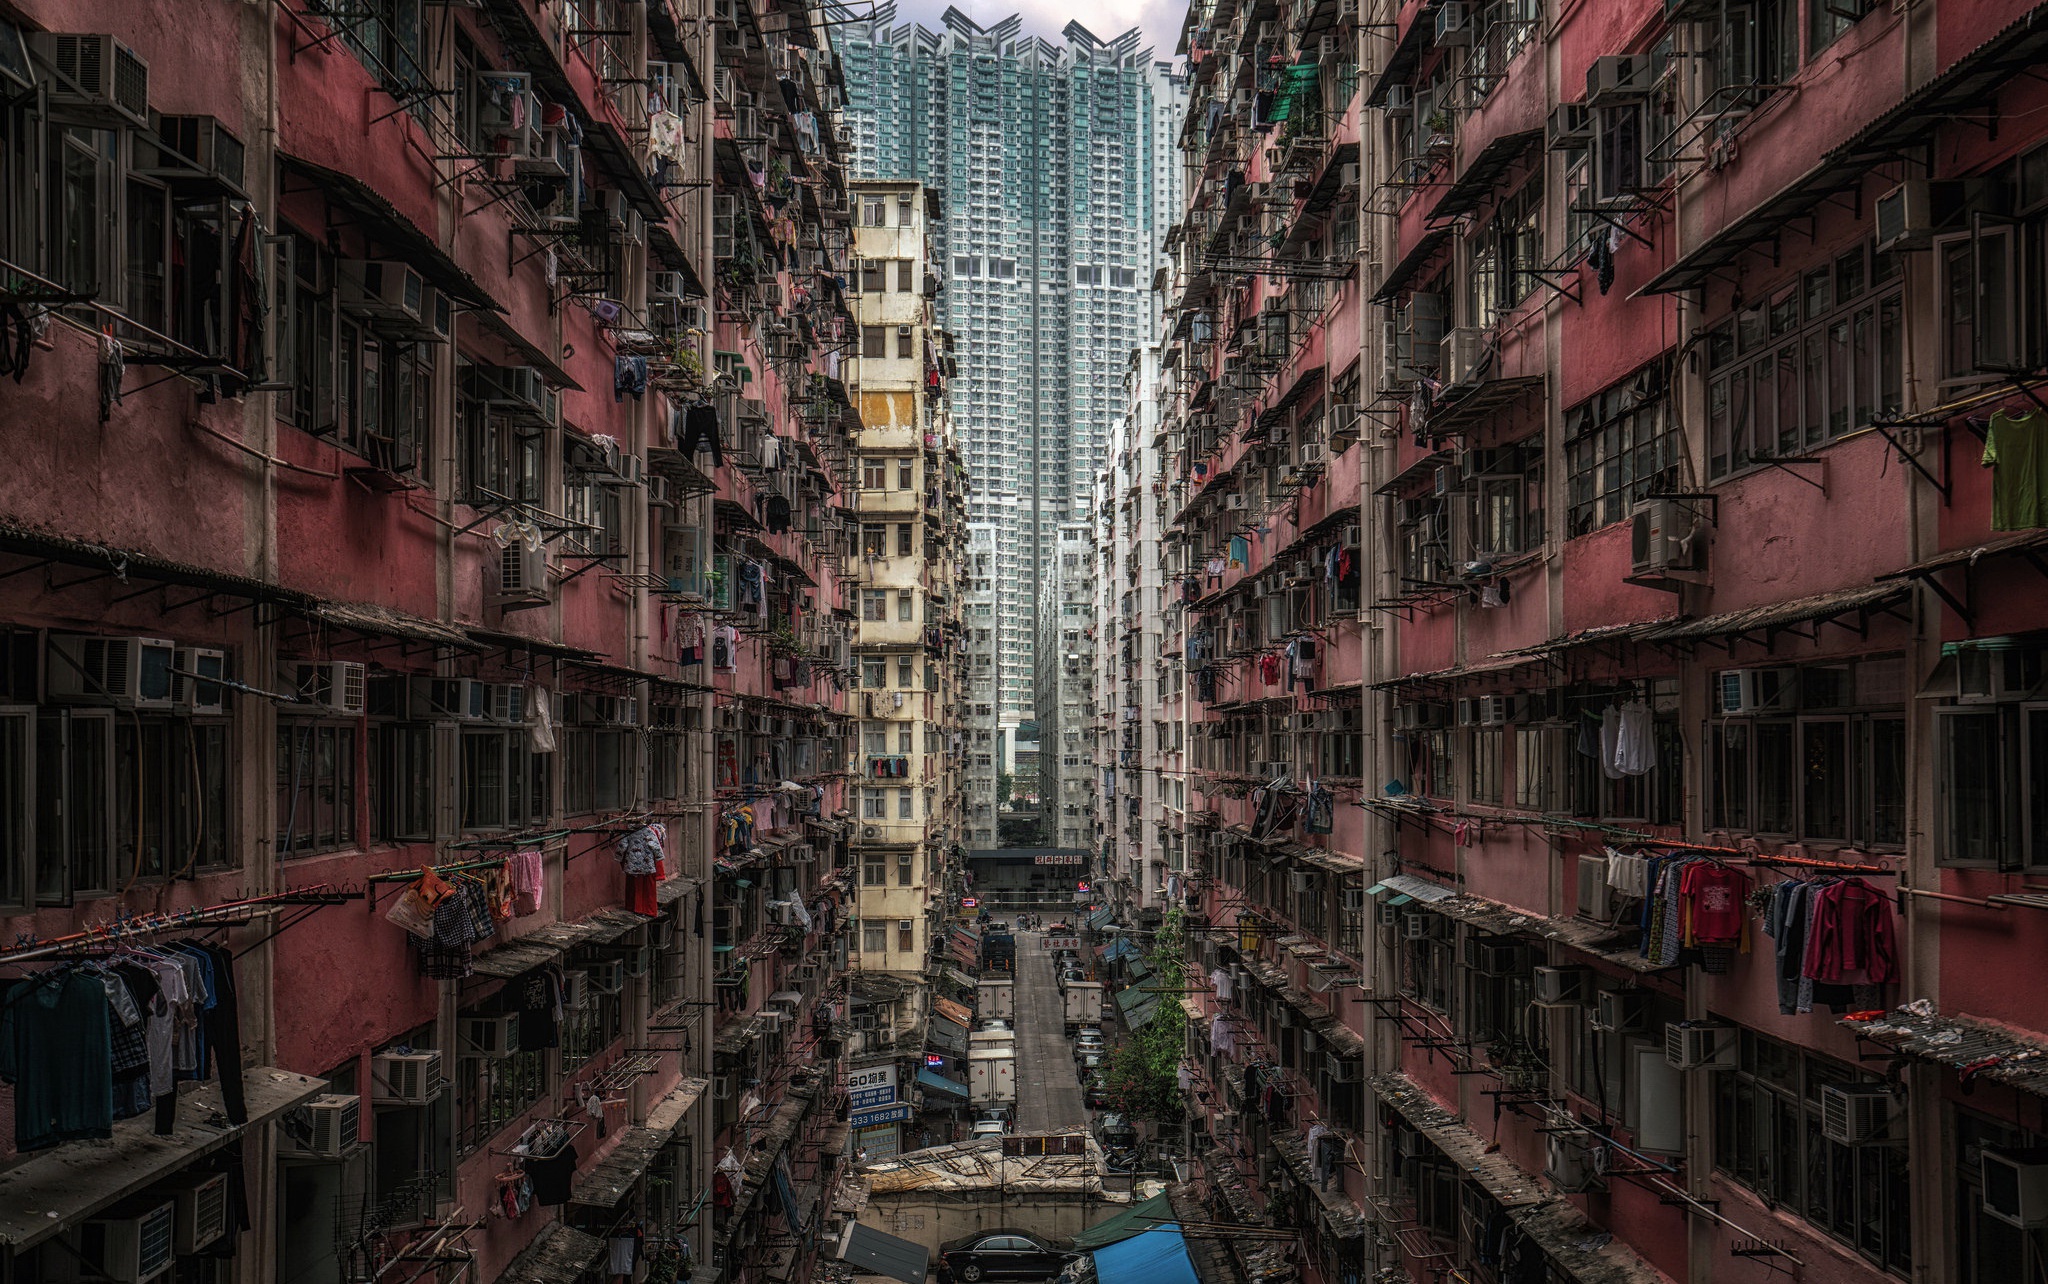 General 2048x1284 Asia Hong Kong urban cityscape block of flats